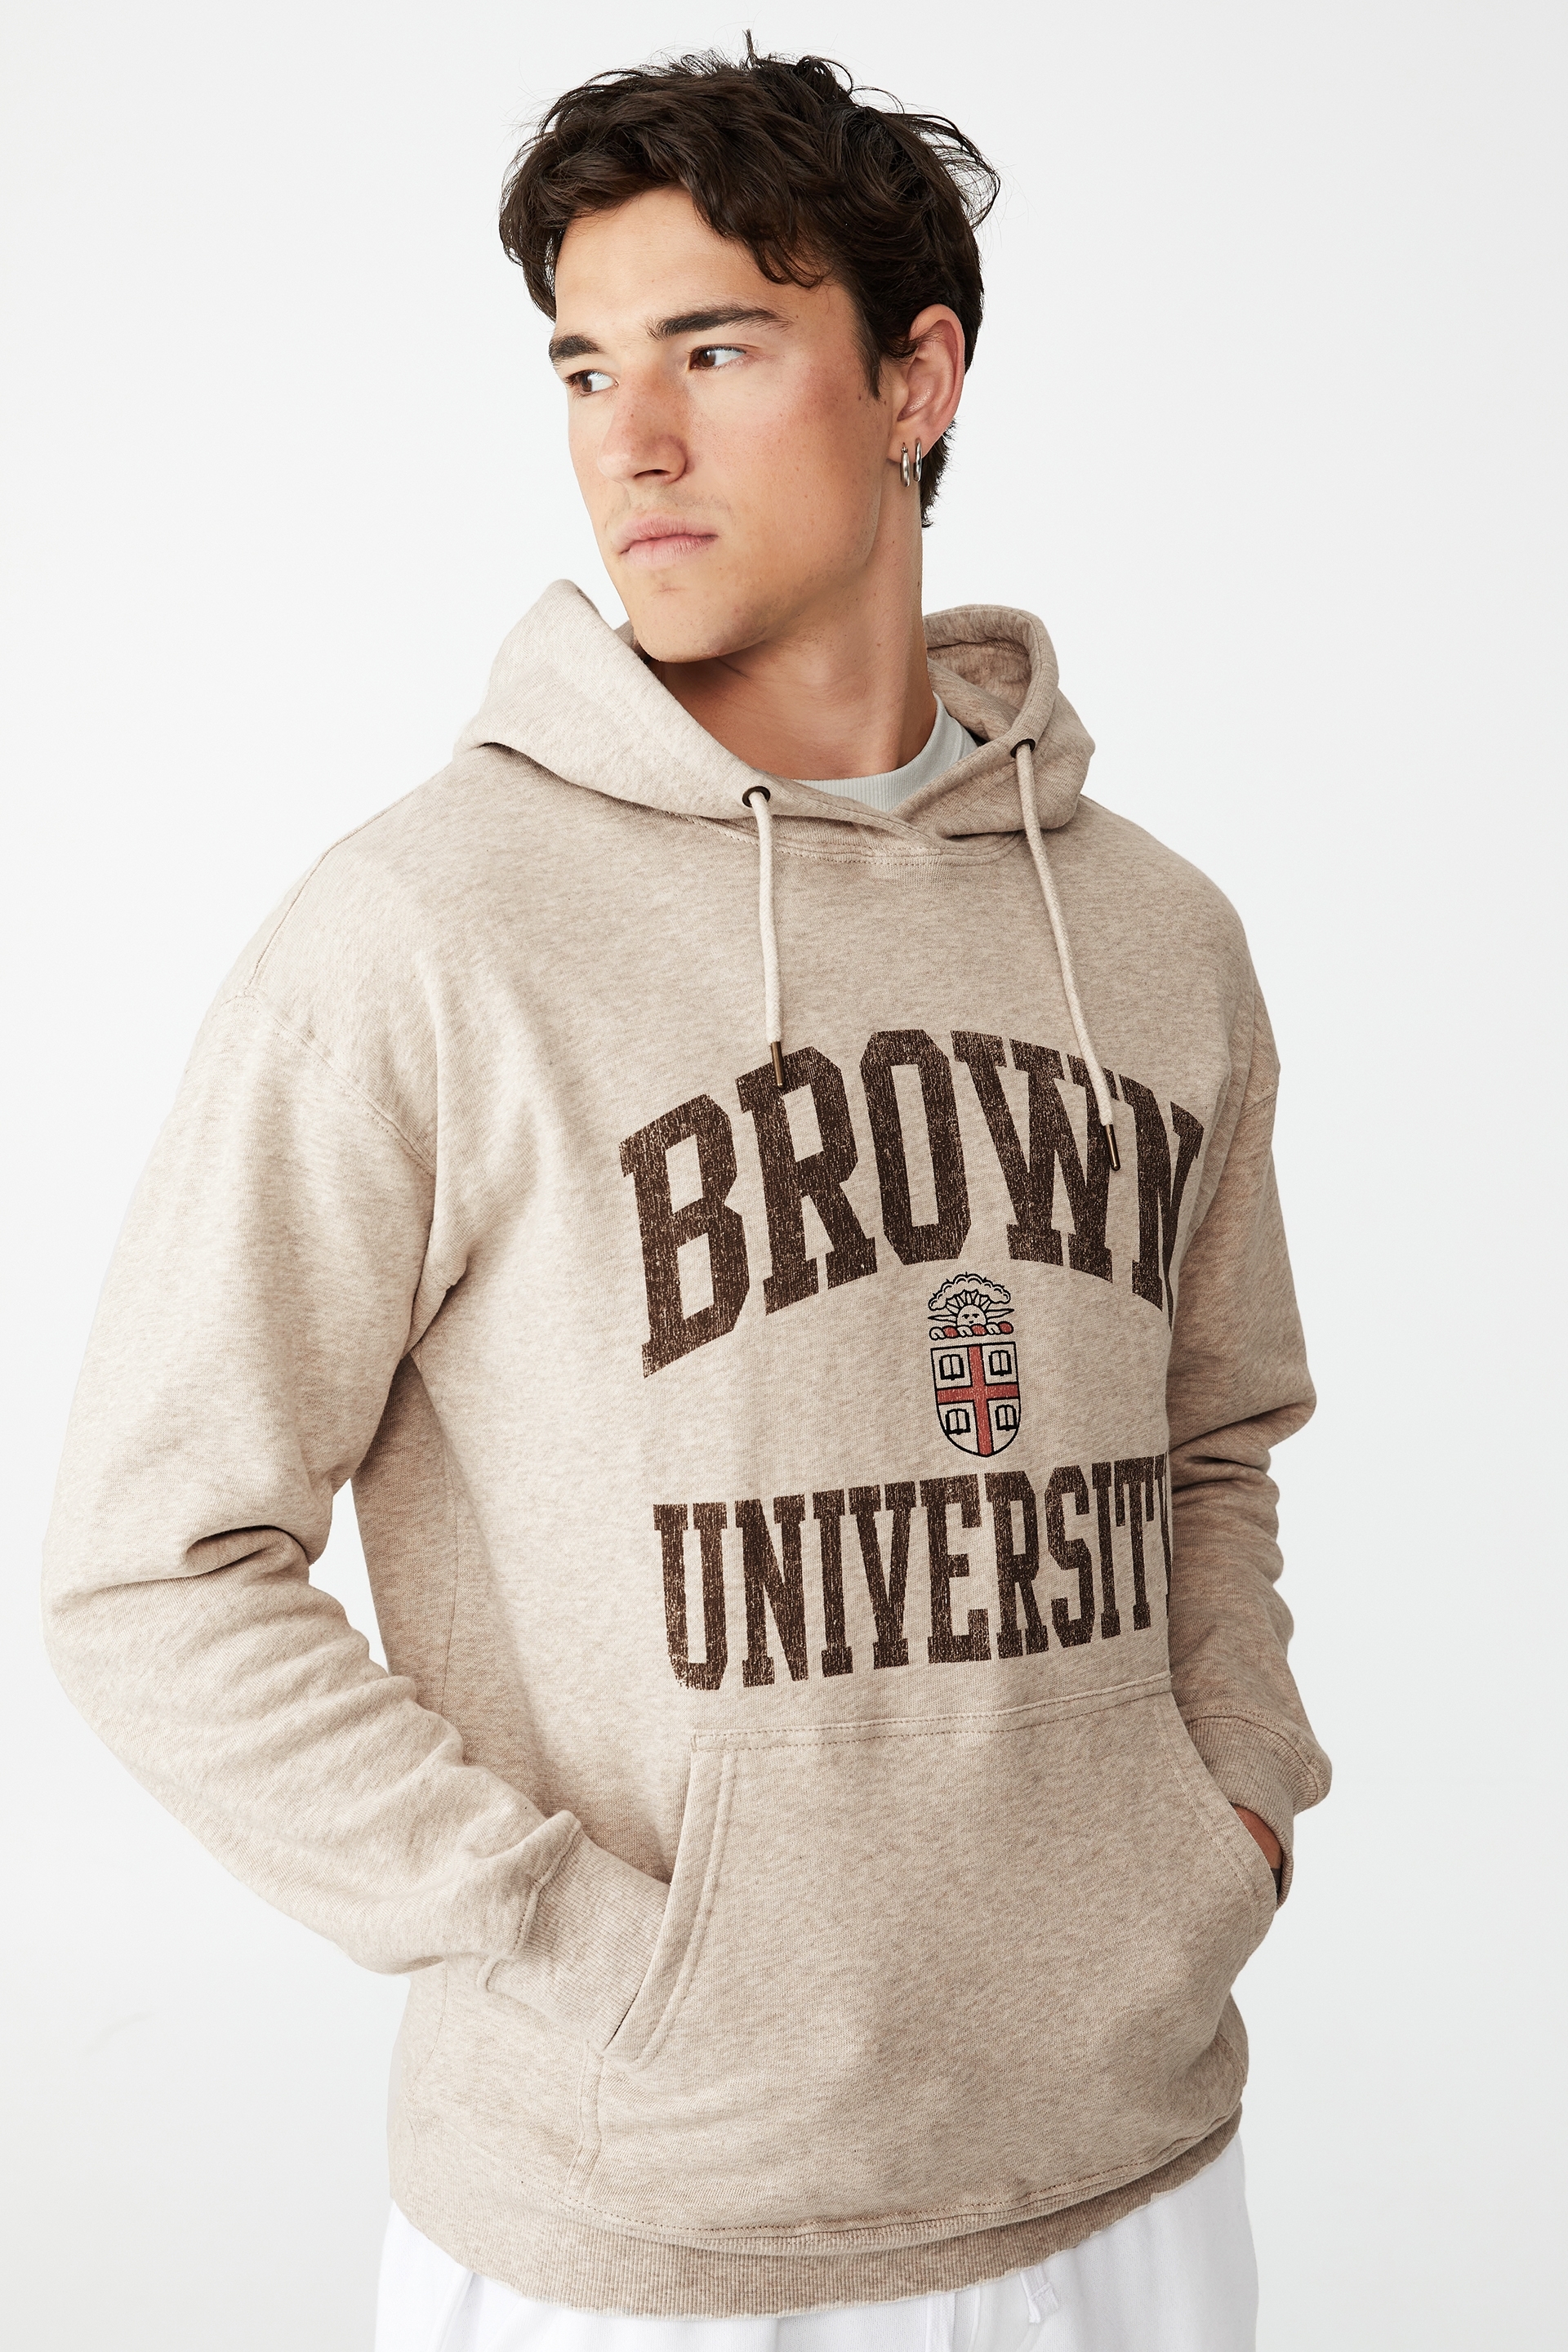 Cotton On Men - Special Edition Fleece Pullover - Lcn bro oatmeal marle/brown university